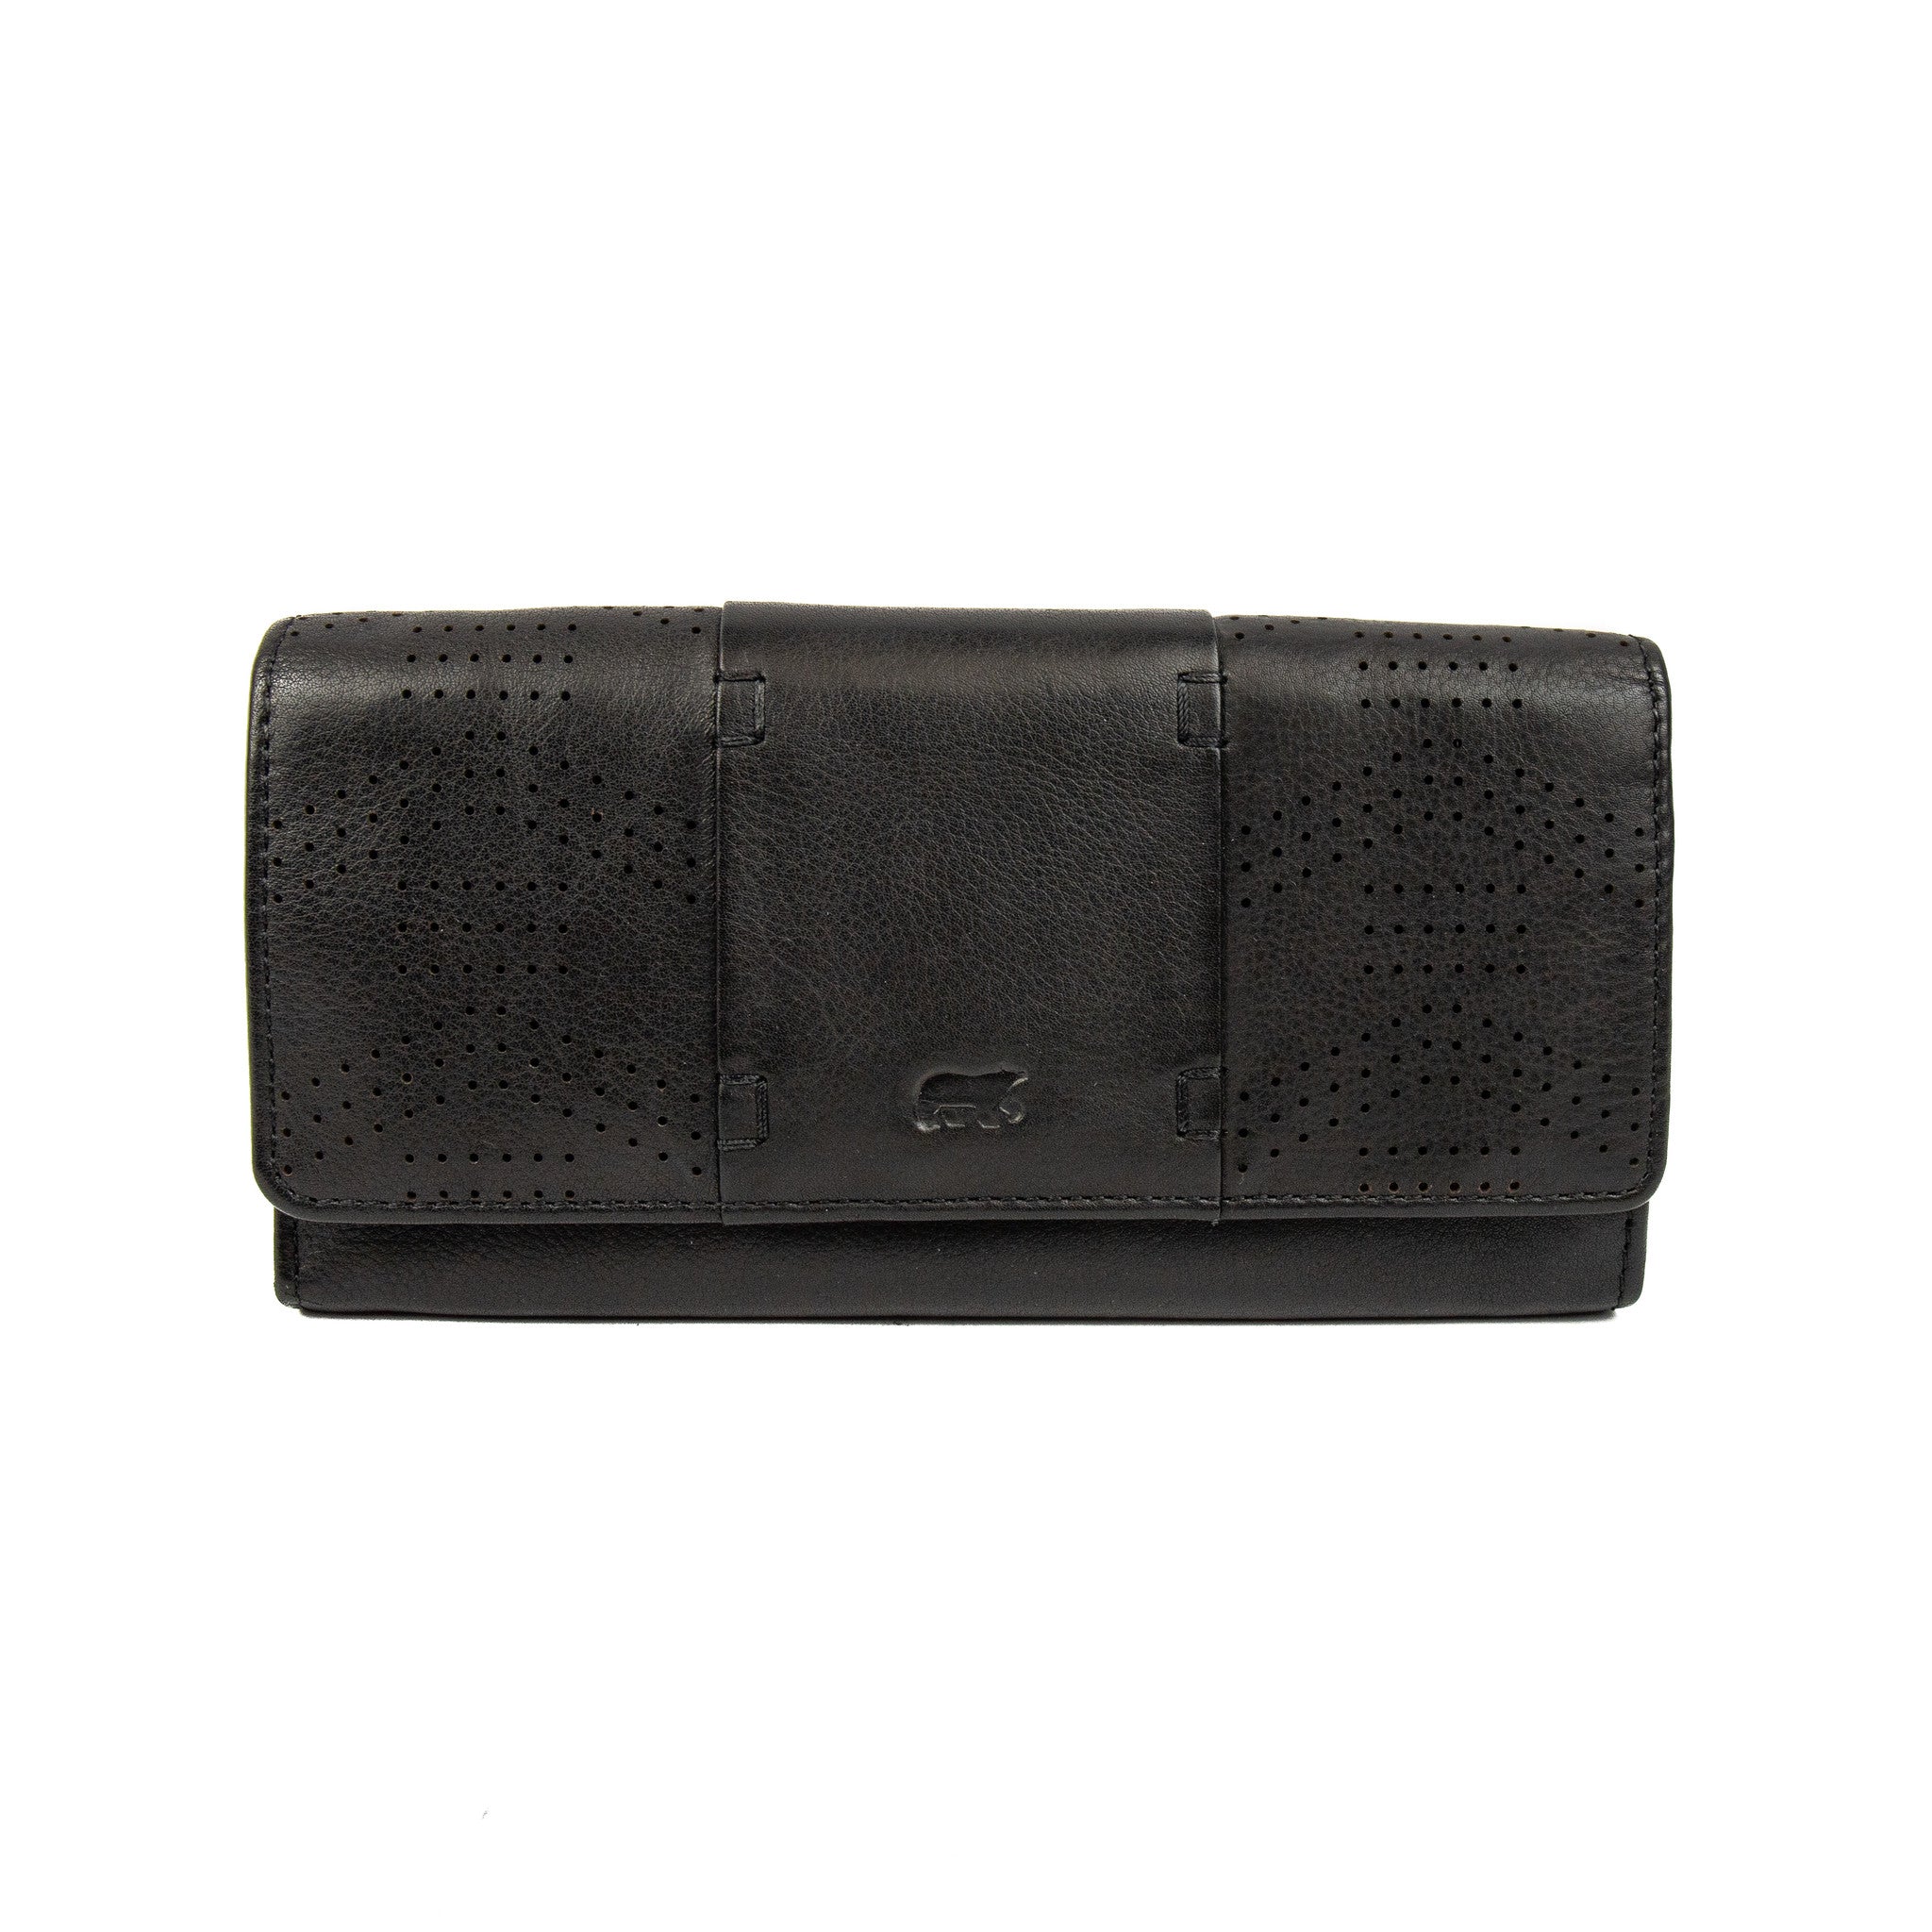 Wrap wallet 'Sterre' black - CL 18208